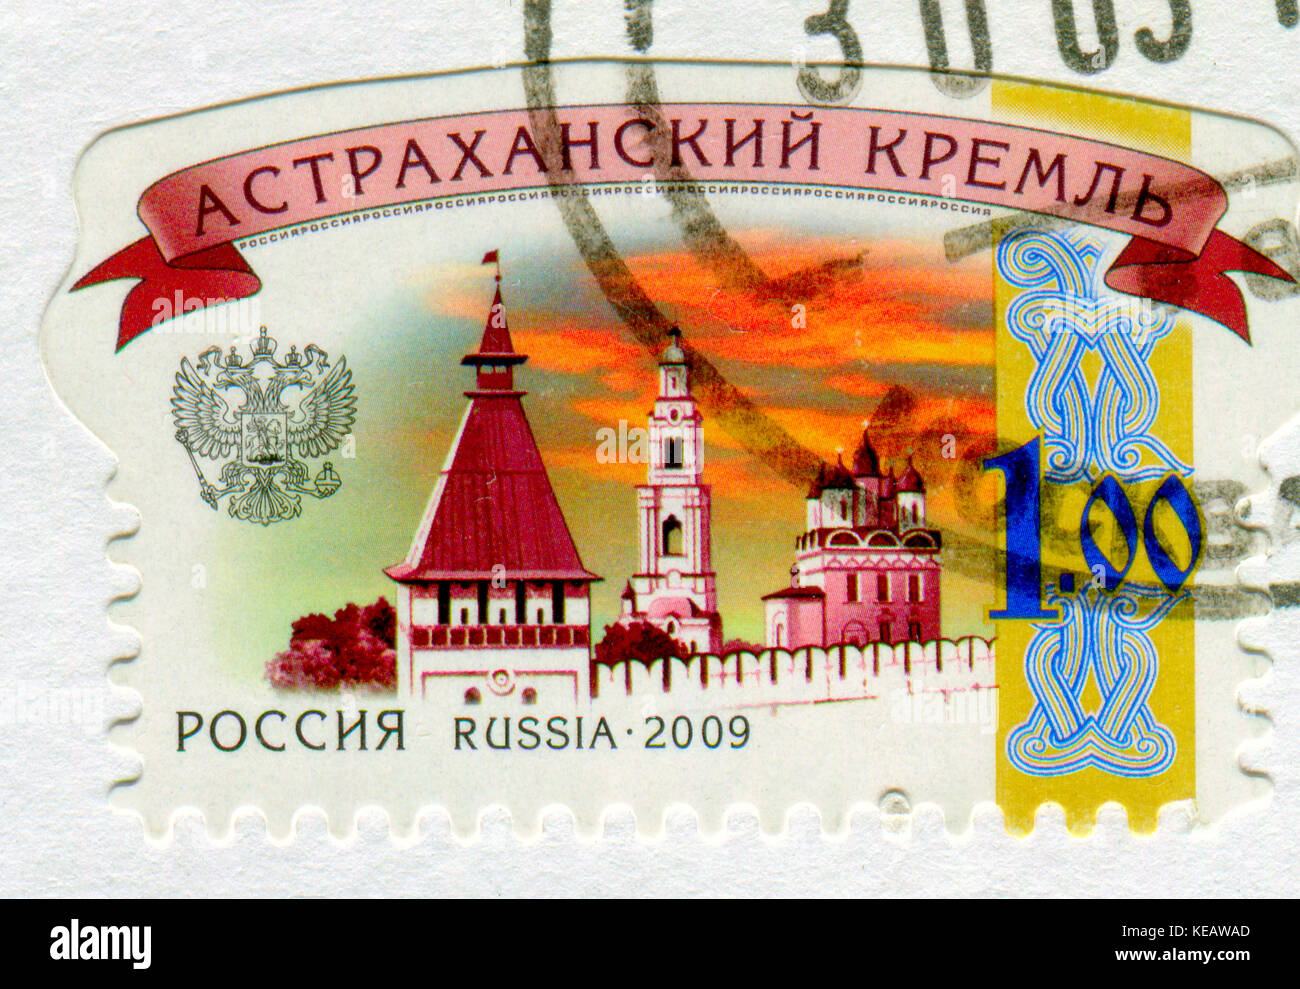 GOMEL, BÉLARUS, 13 octobre 2017, de timbres en Russie montre image du Kremlin d'Astrakhan, vers 2009. Banque D'Images